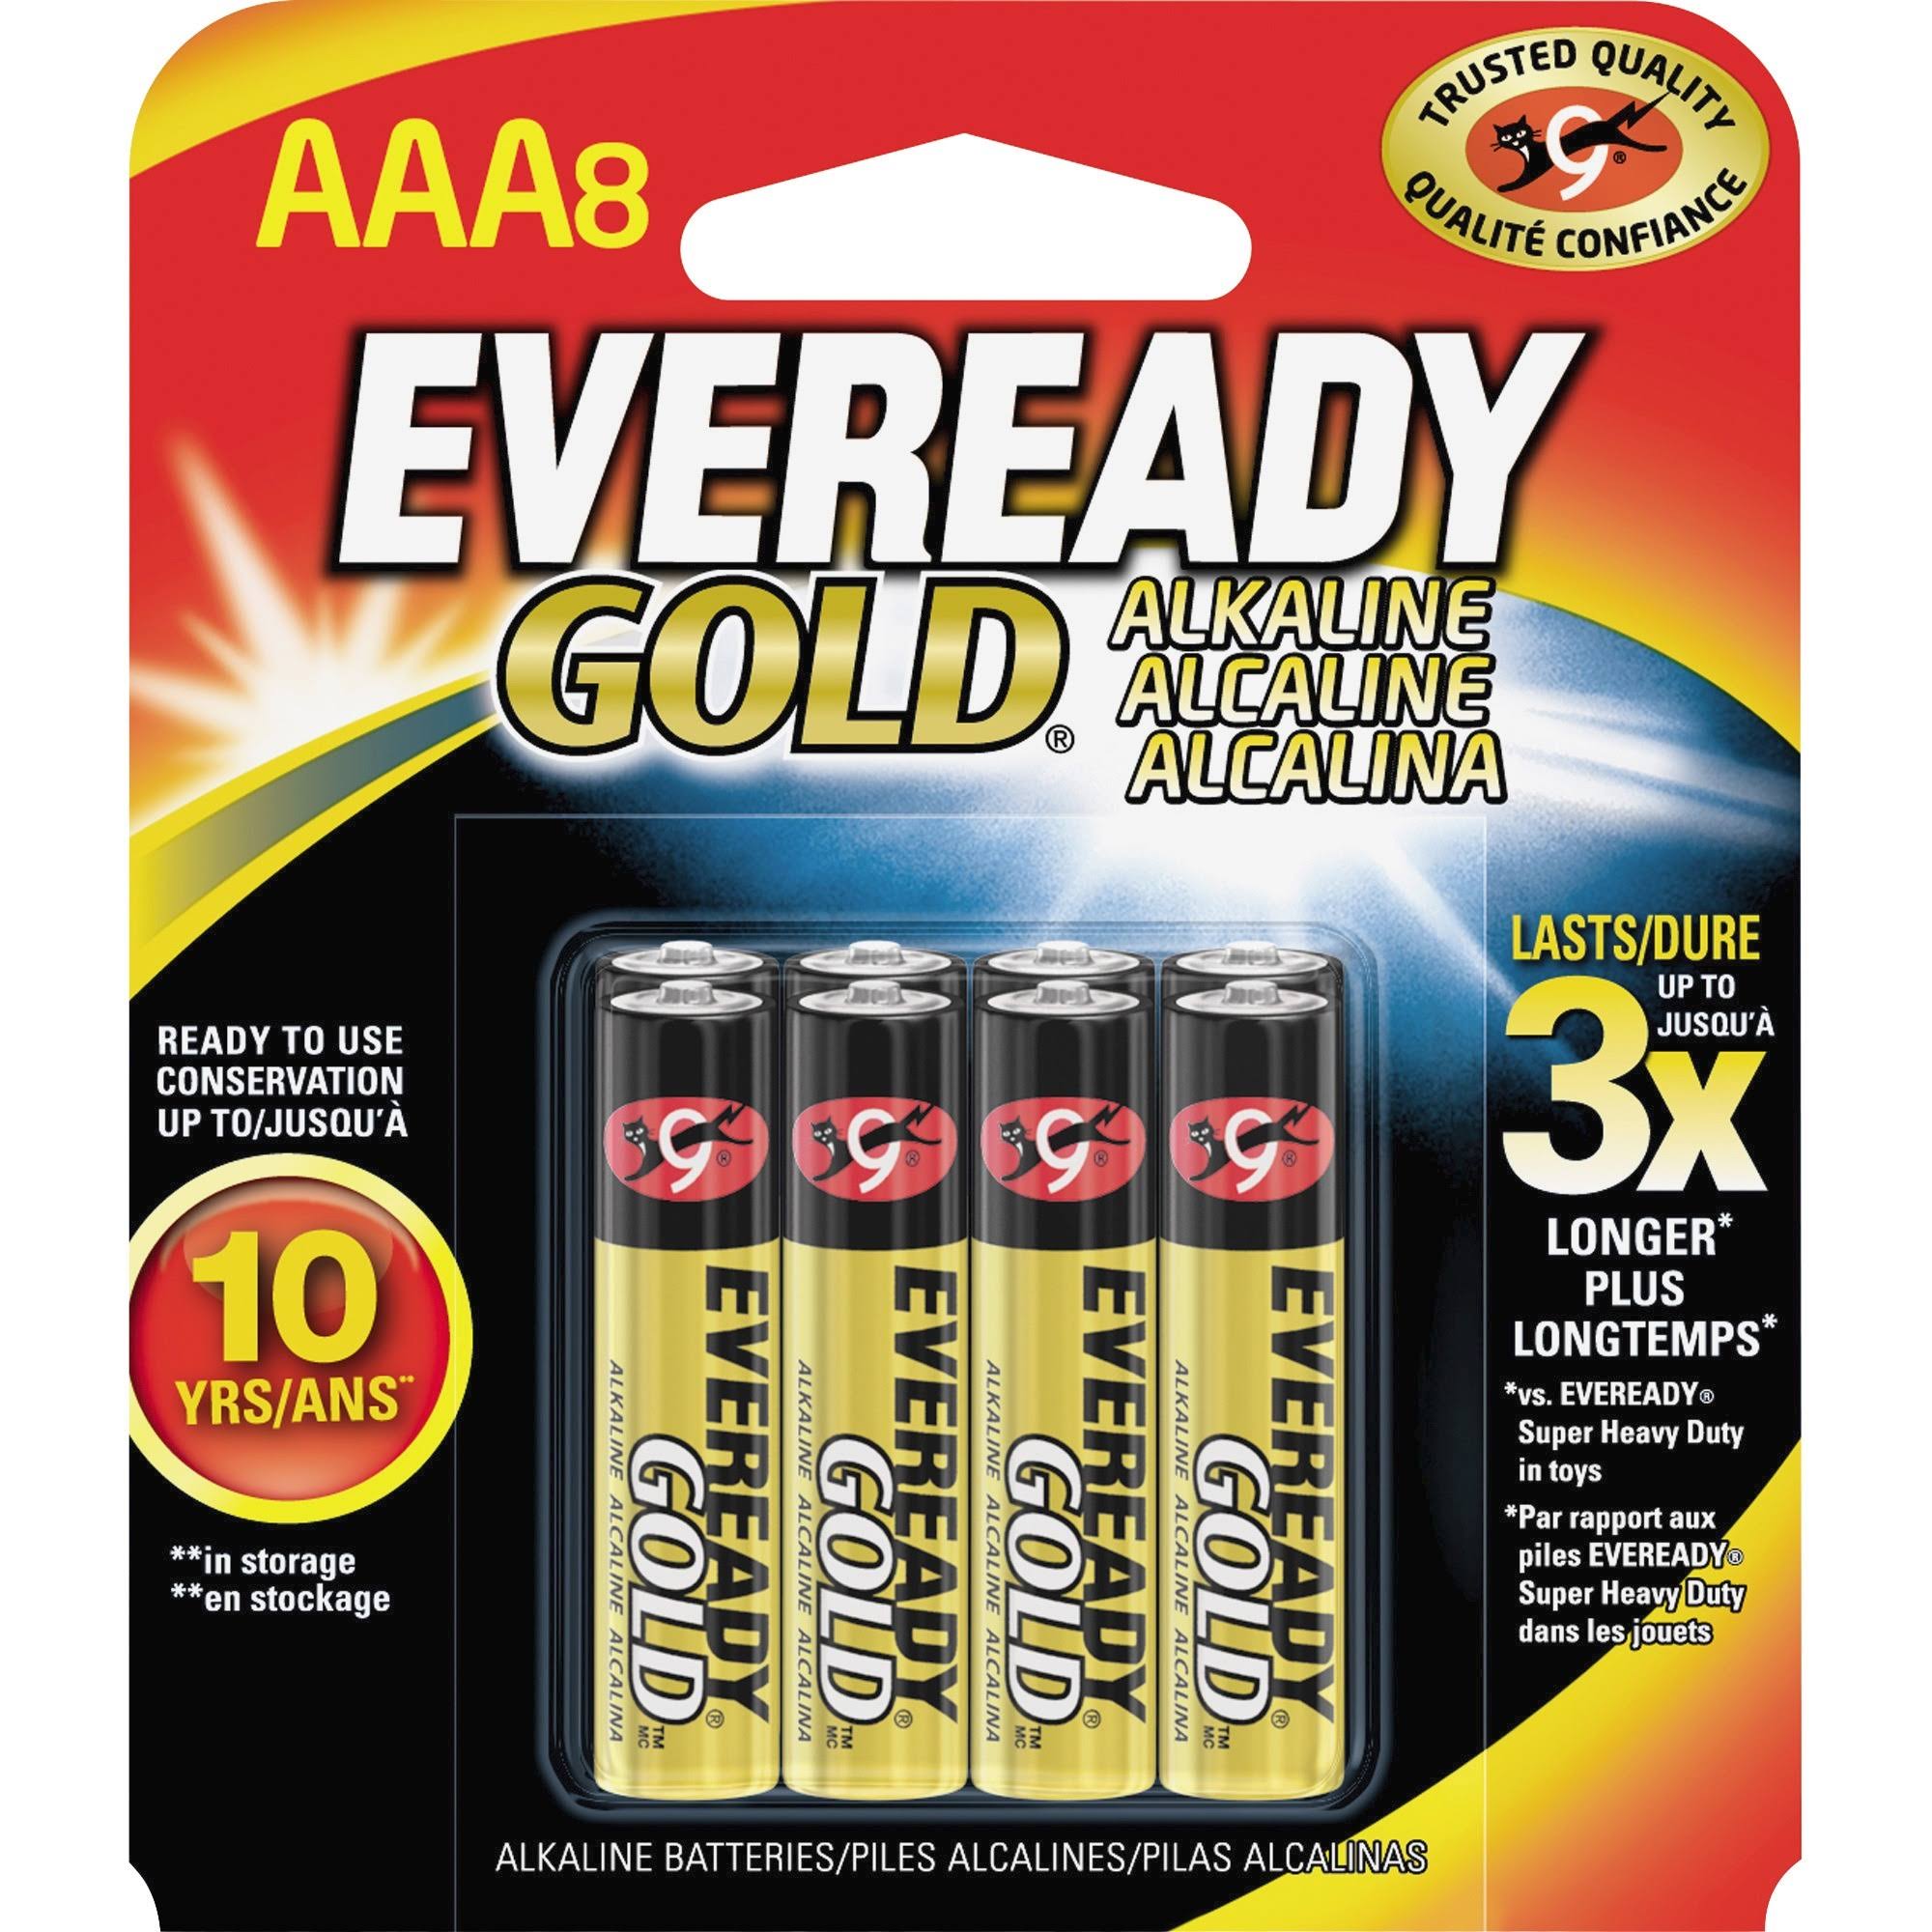 Eveready Gold Batteries - AAA. 8 Batteries